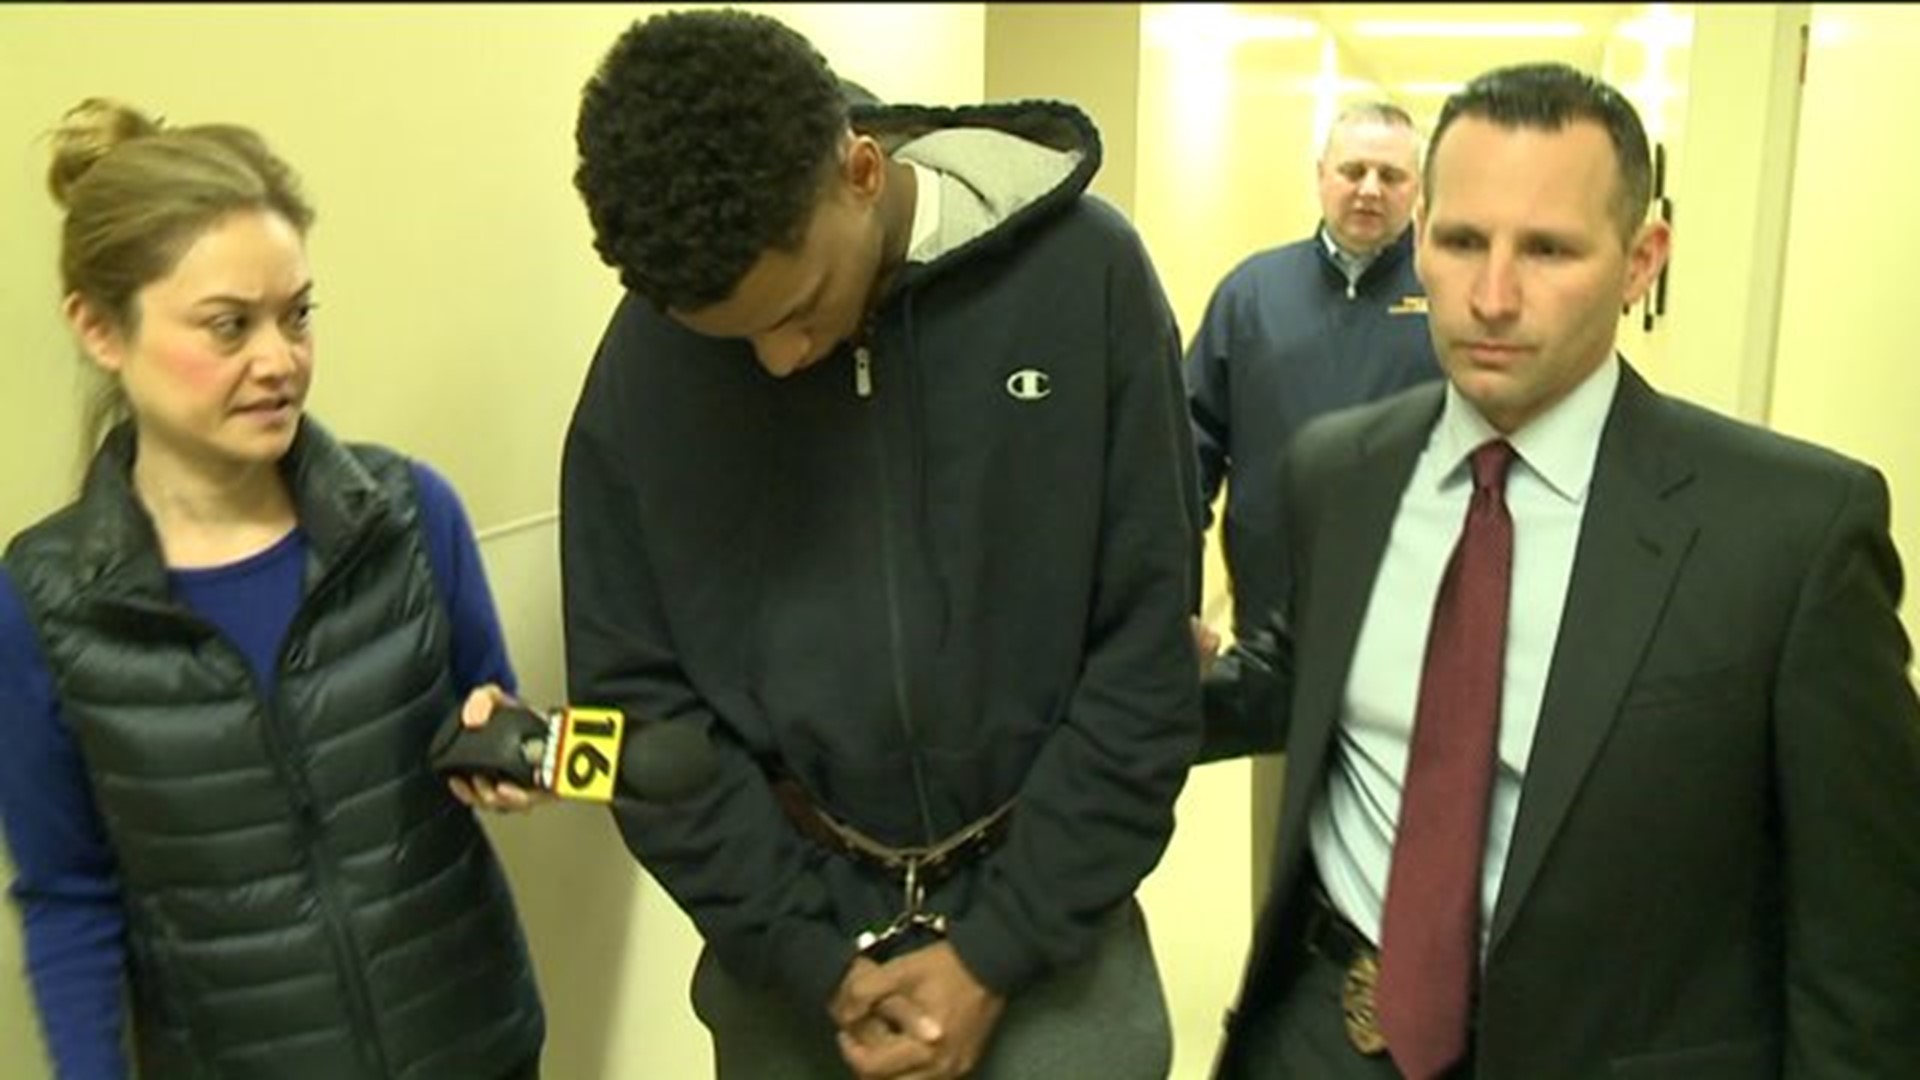 Suspect in Custody for Stabbing in Scranton